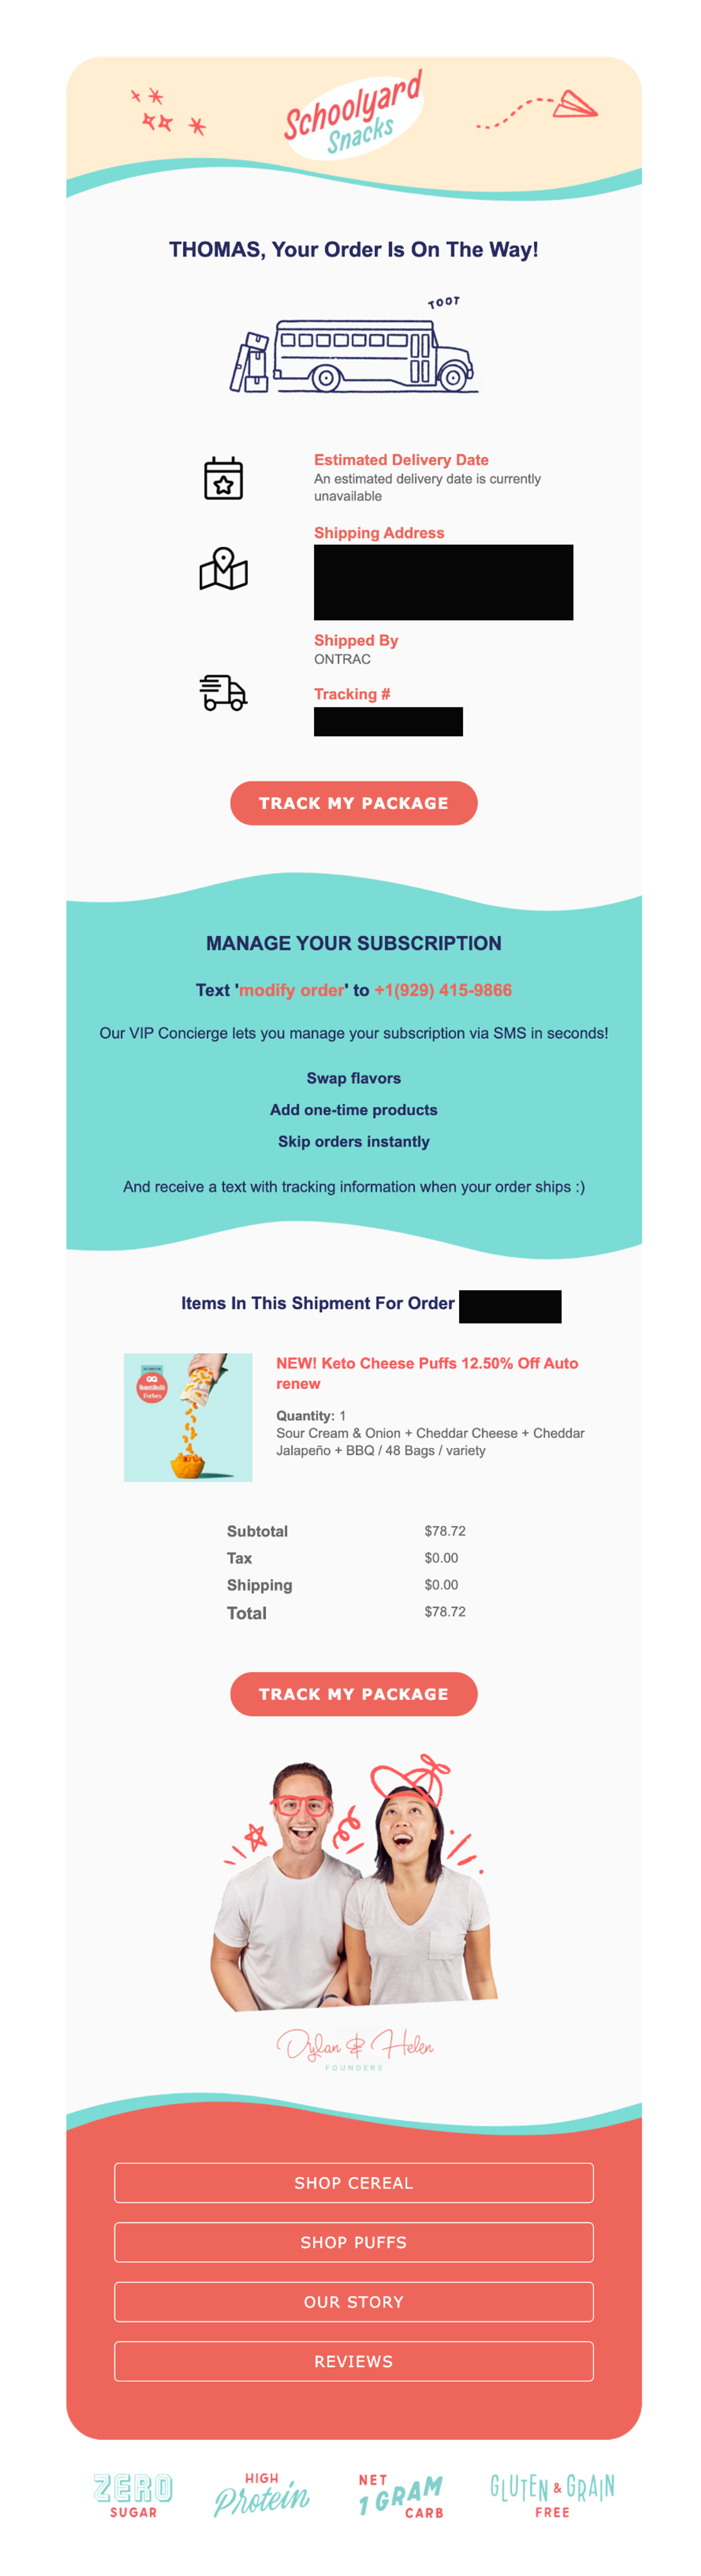 Schoolyard Snacks Order Confirmation Email Template screenshot